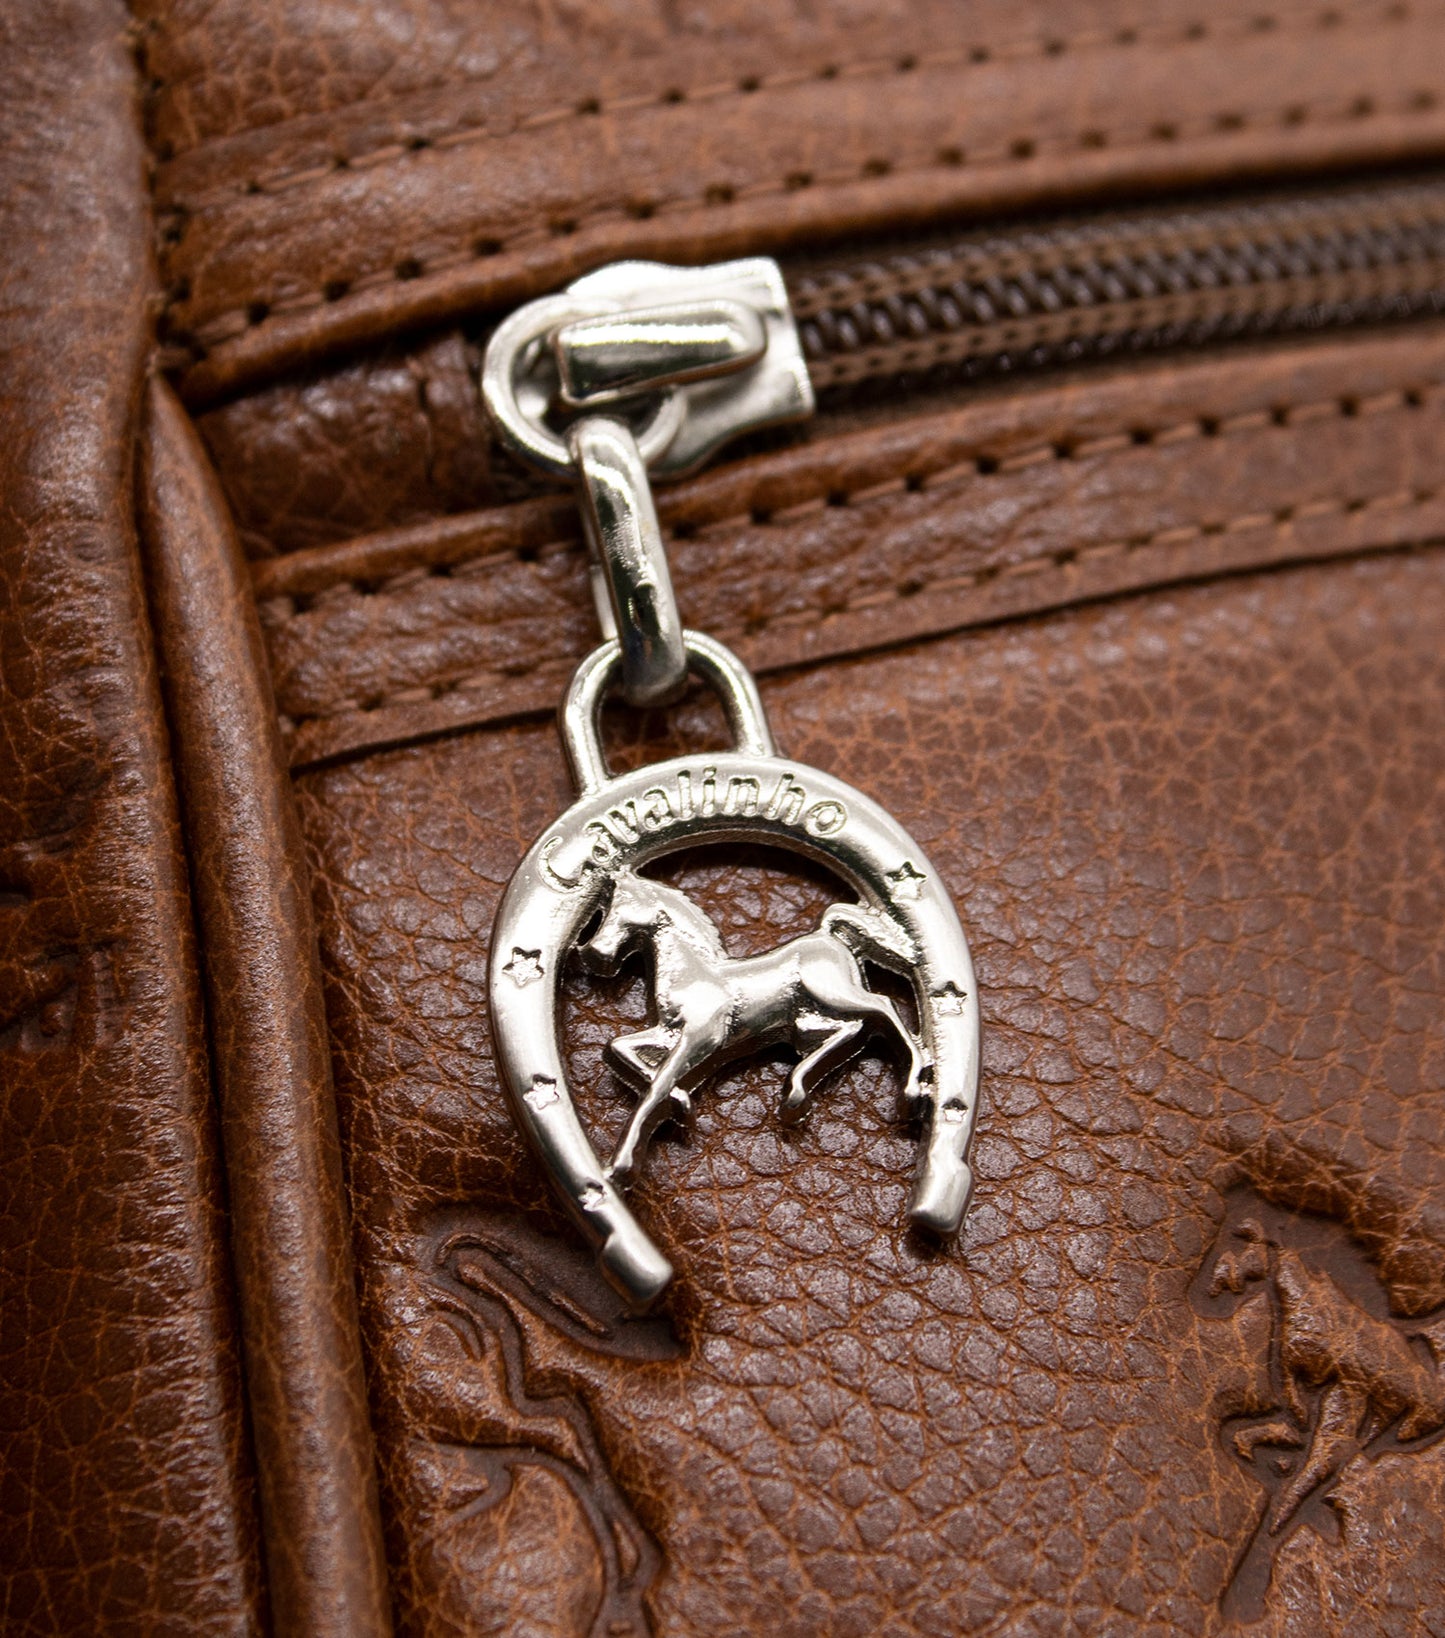 #color_ SaddleBrown | Cavalinho Cavalo Lusitano Leather Crossbody Bag - SaddleBrown - 18090373.13_P05